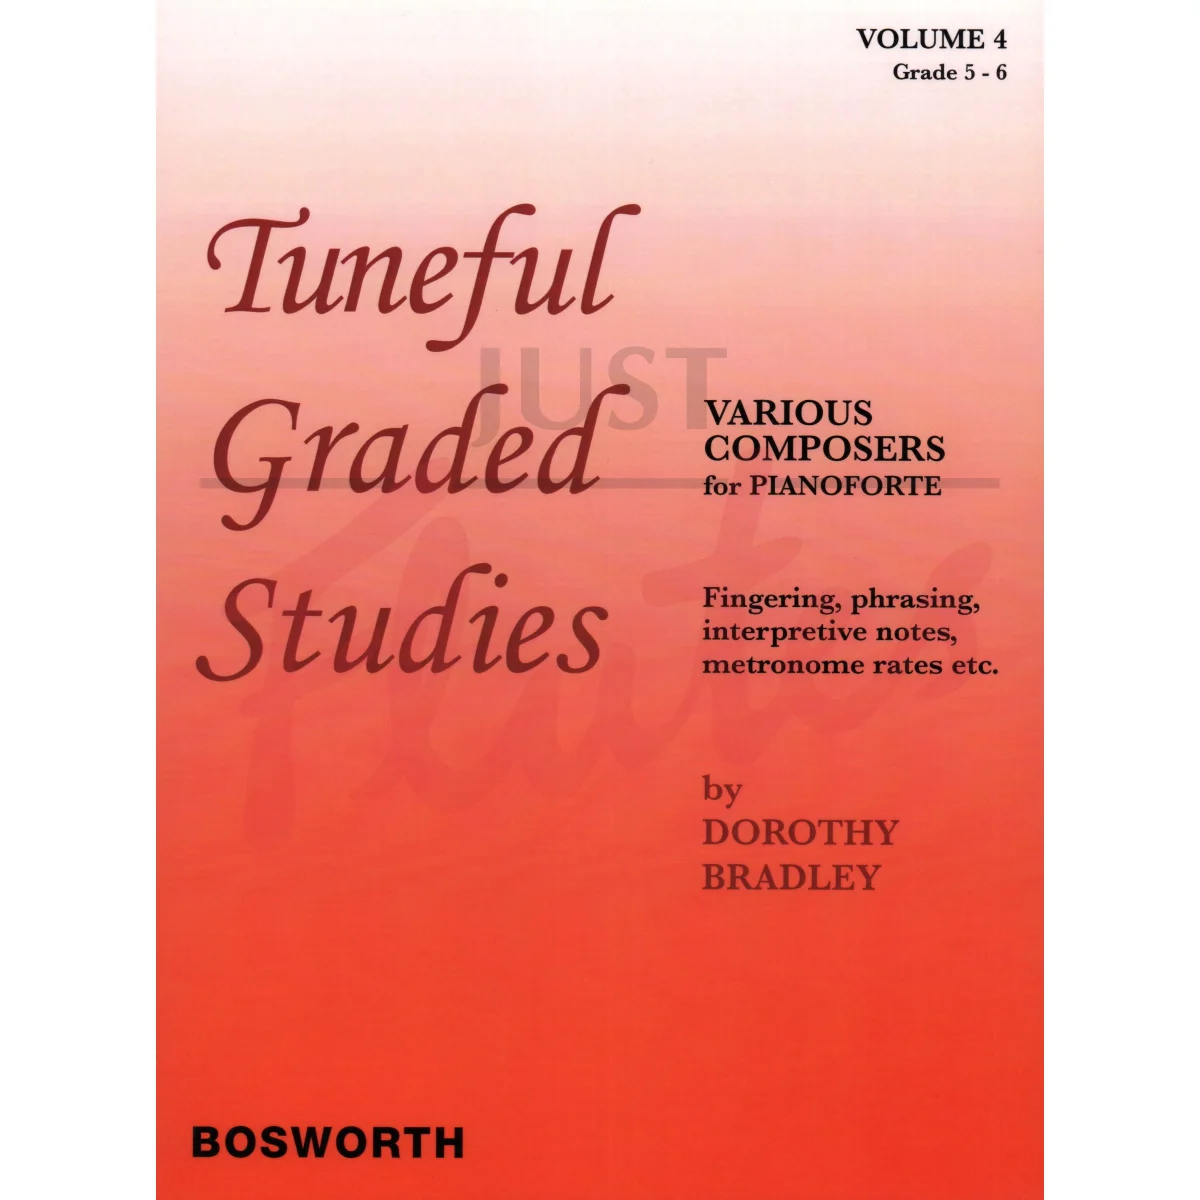 Tuneful Graded Studies Vol 4 for Piano 